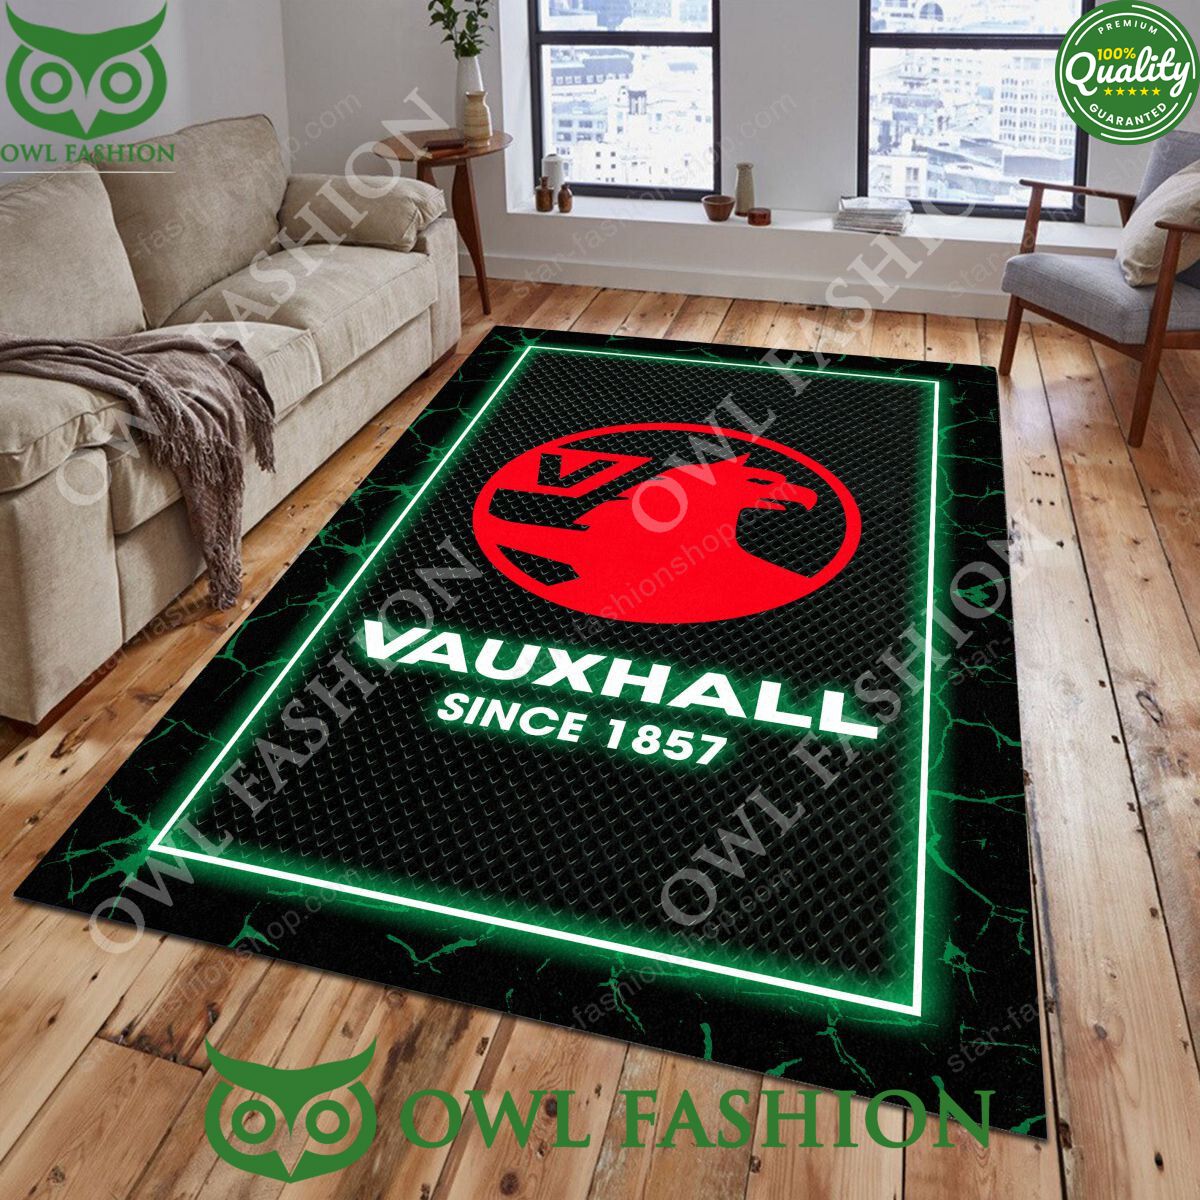 Vauxhall Luxury Car Brand Limited Lighting Rug Carpet